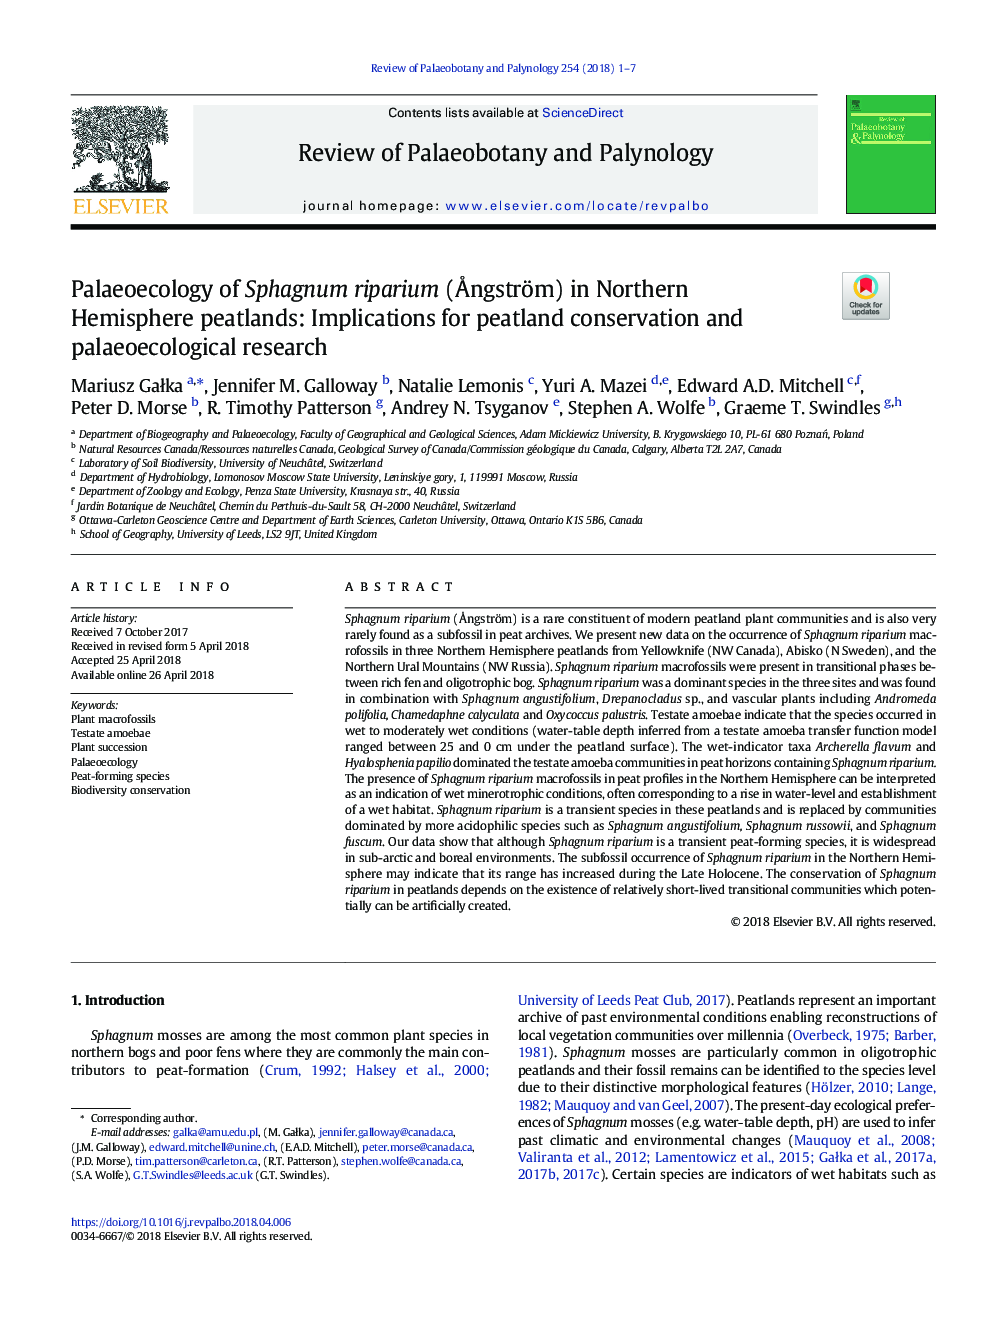 Palaeoecology of Sphagnum riparium (Ãngström) in Northern Hemisphere peatlands: Implications for peatland conservation and palaeoecological research